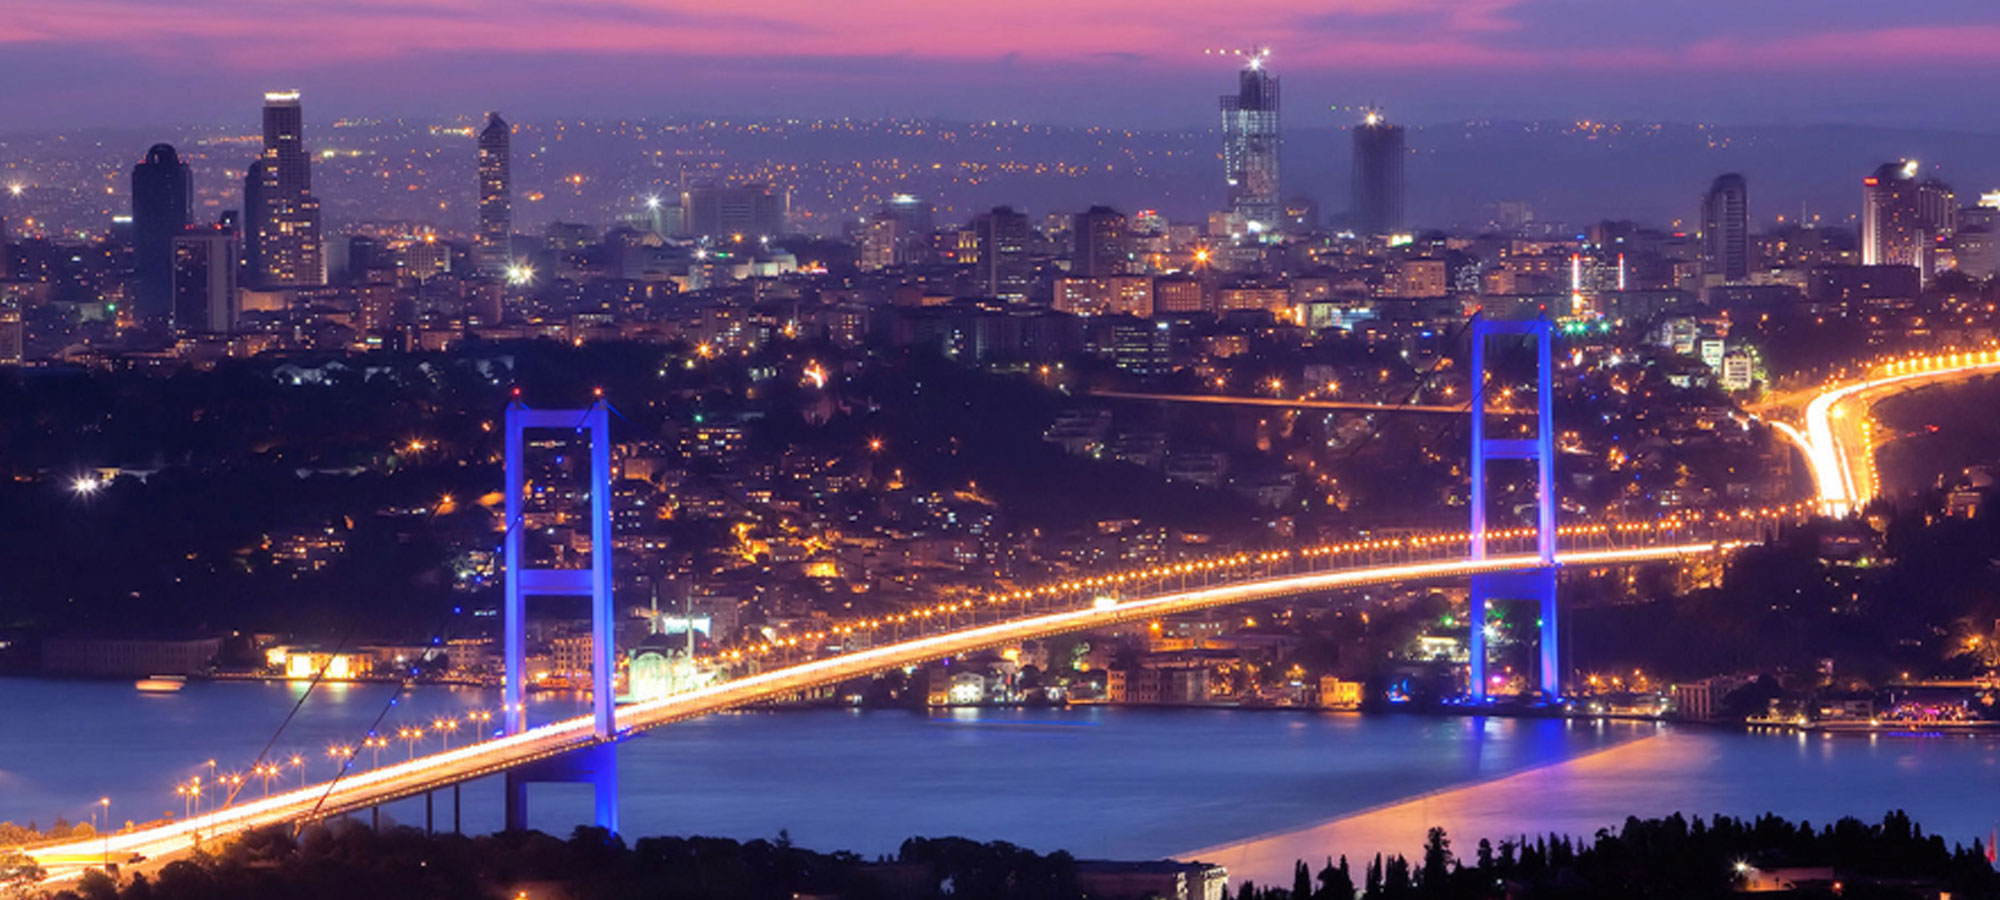 اسطنبول-تركيا (8)